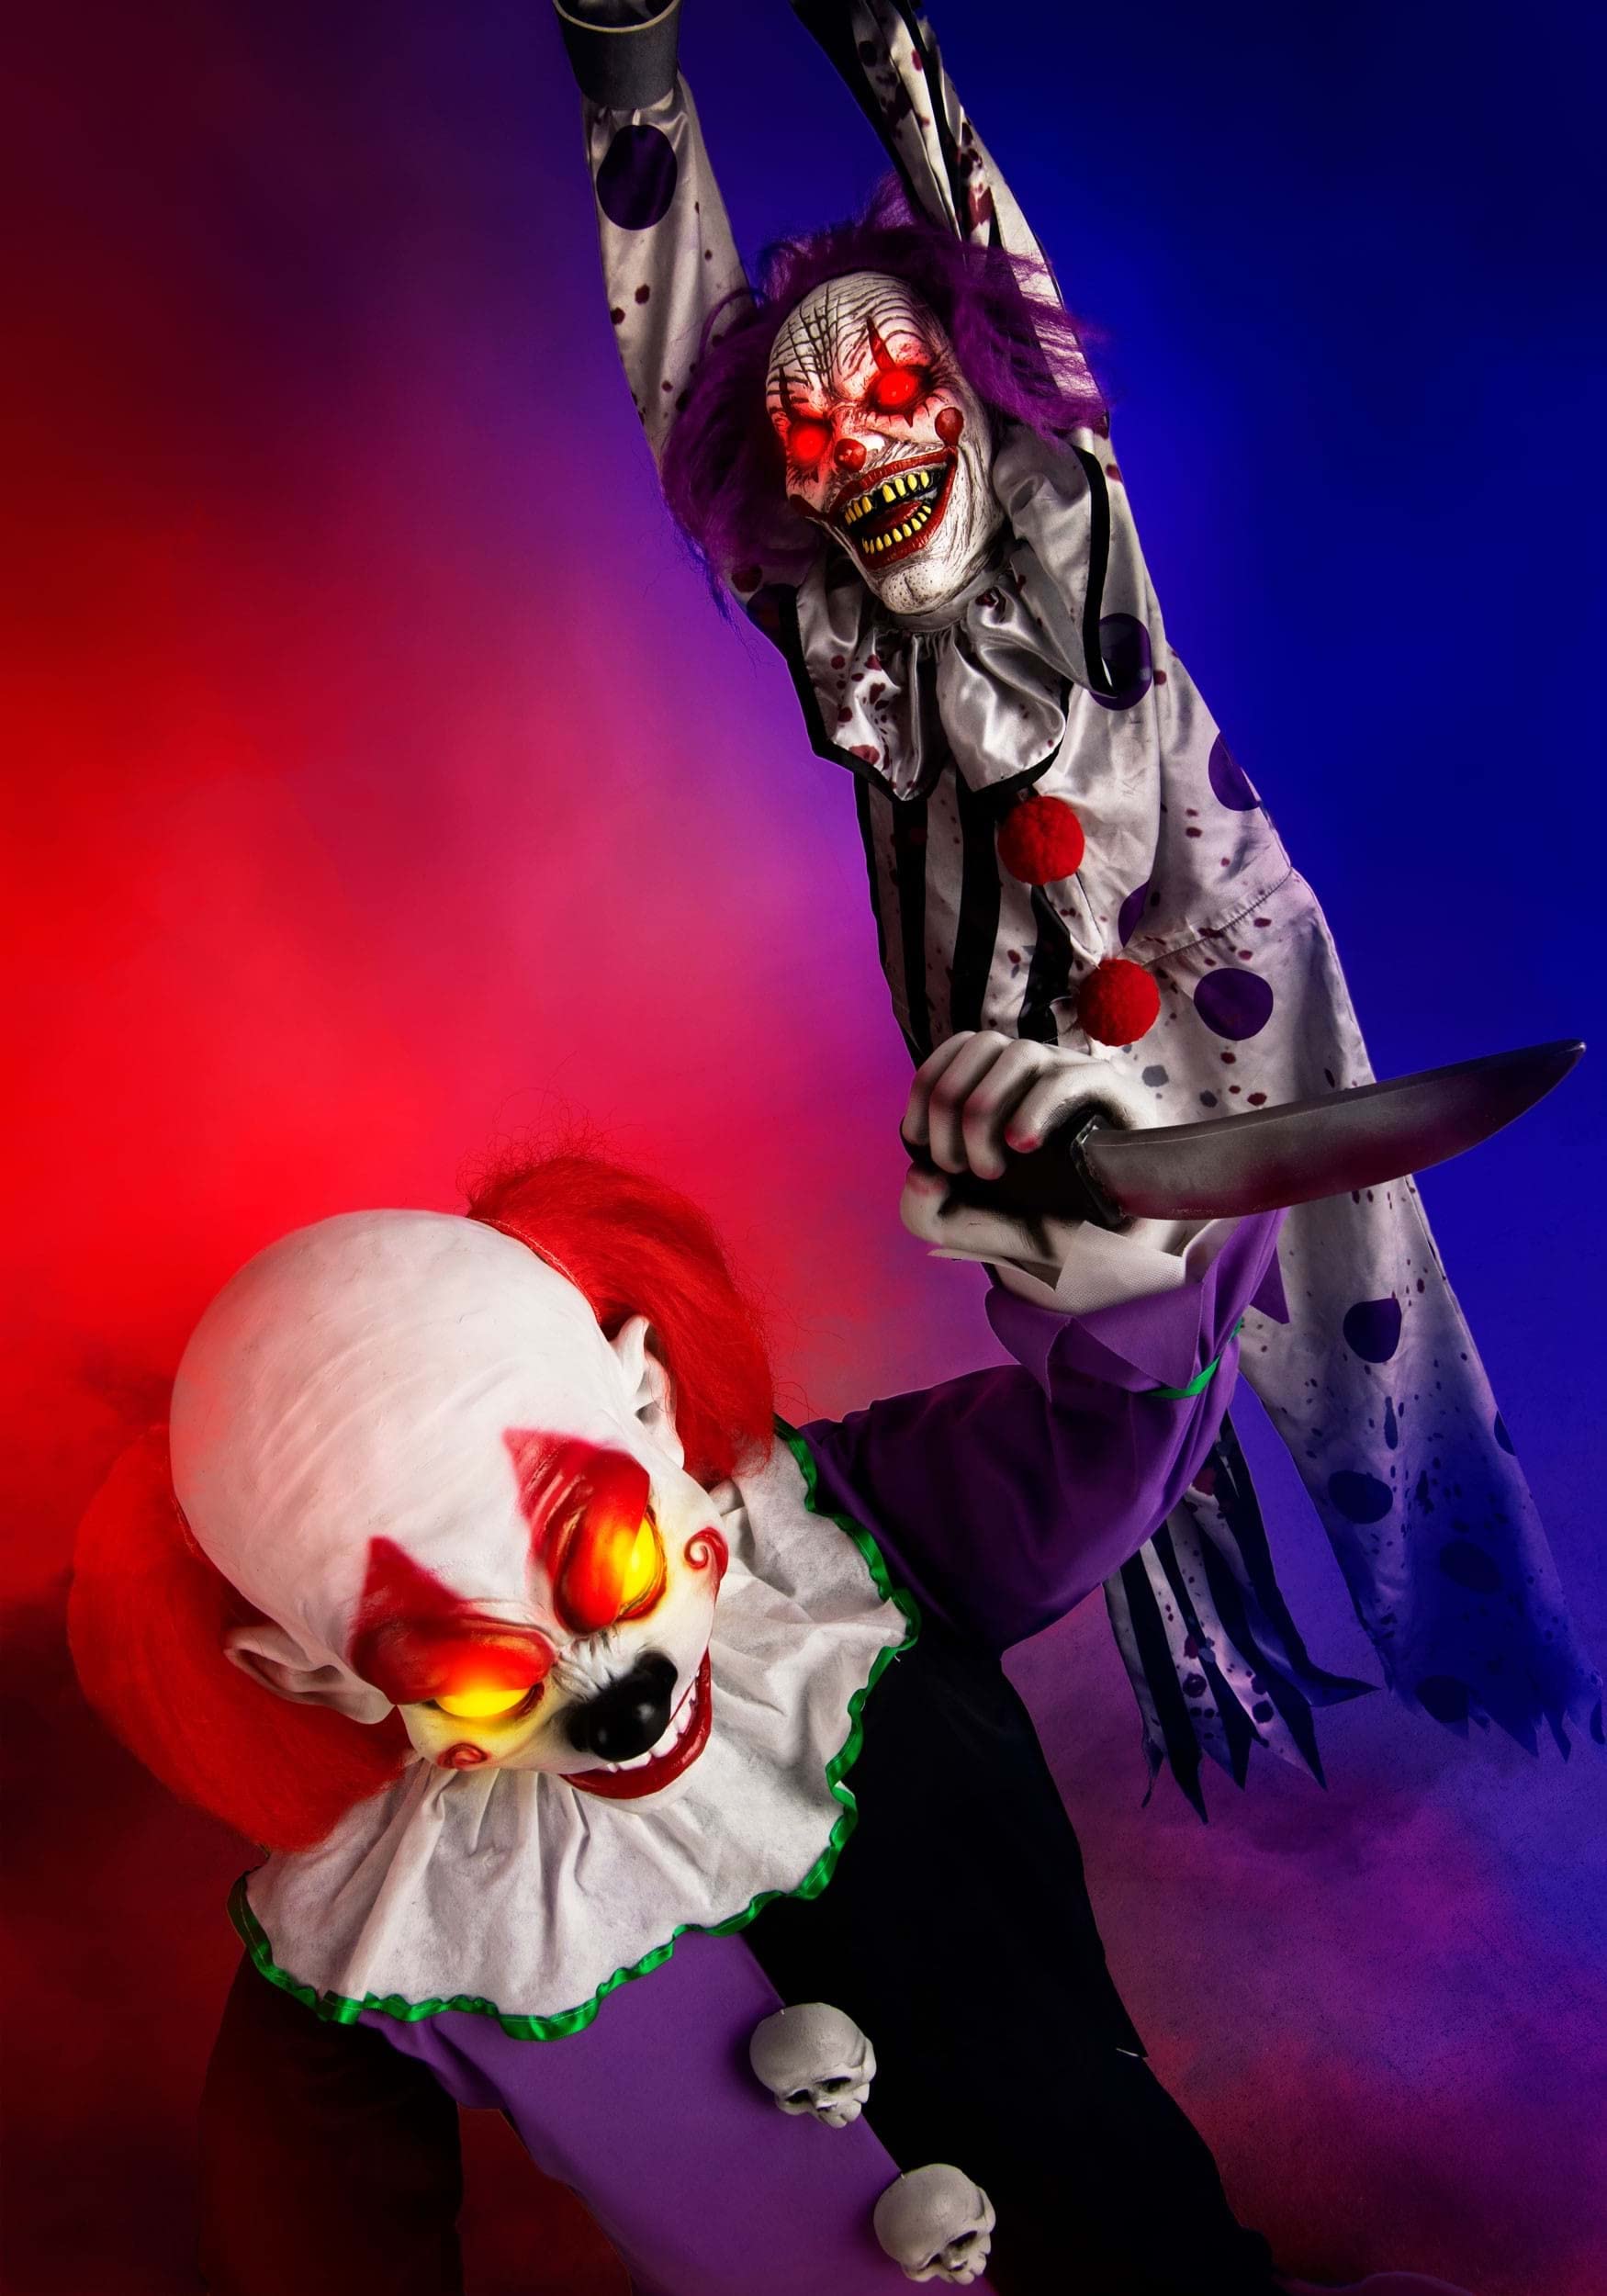 Fun Costumes Little Killer Clown Animatronic Decoration Standard